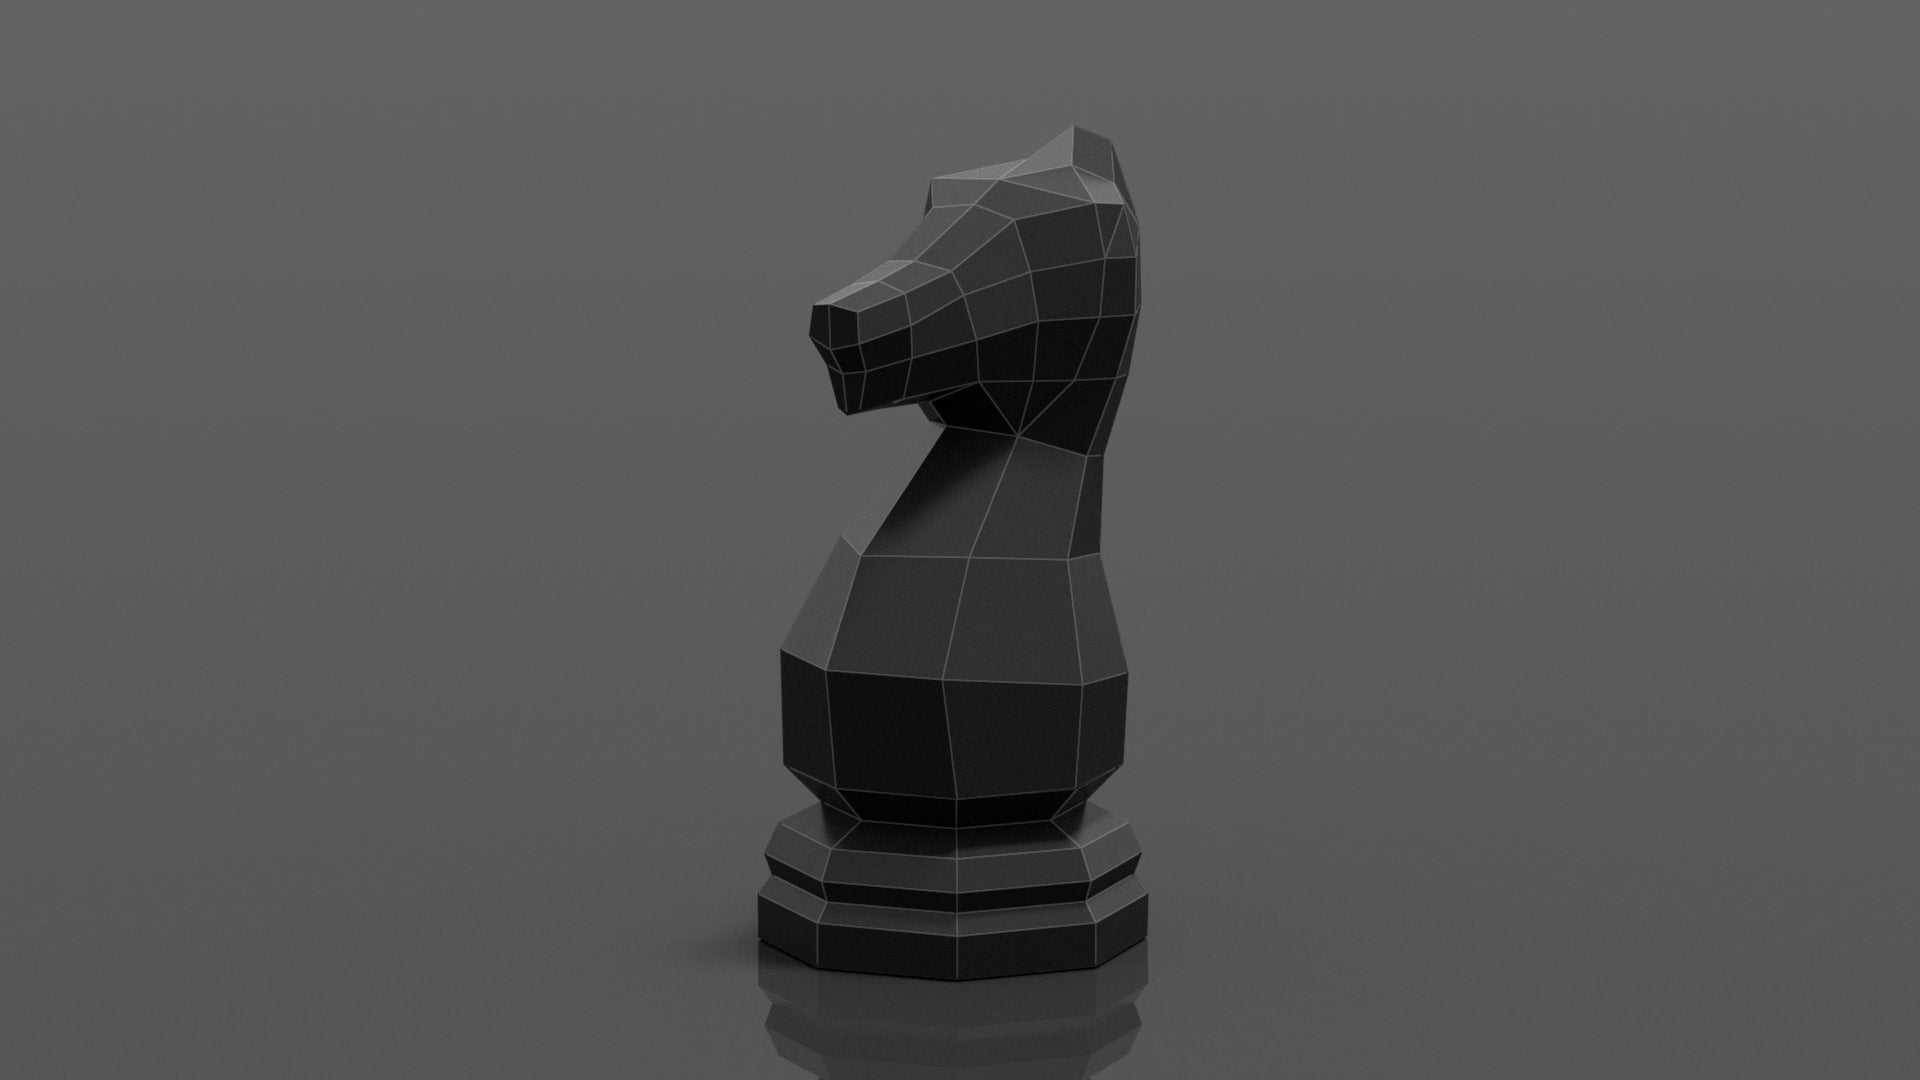 White Knight Chess Piece Life Size Statue